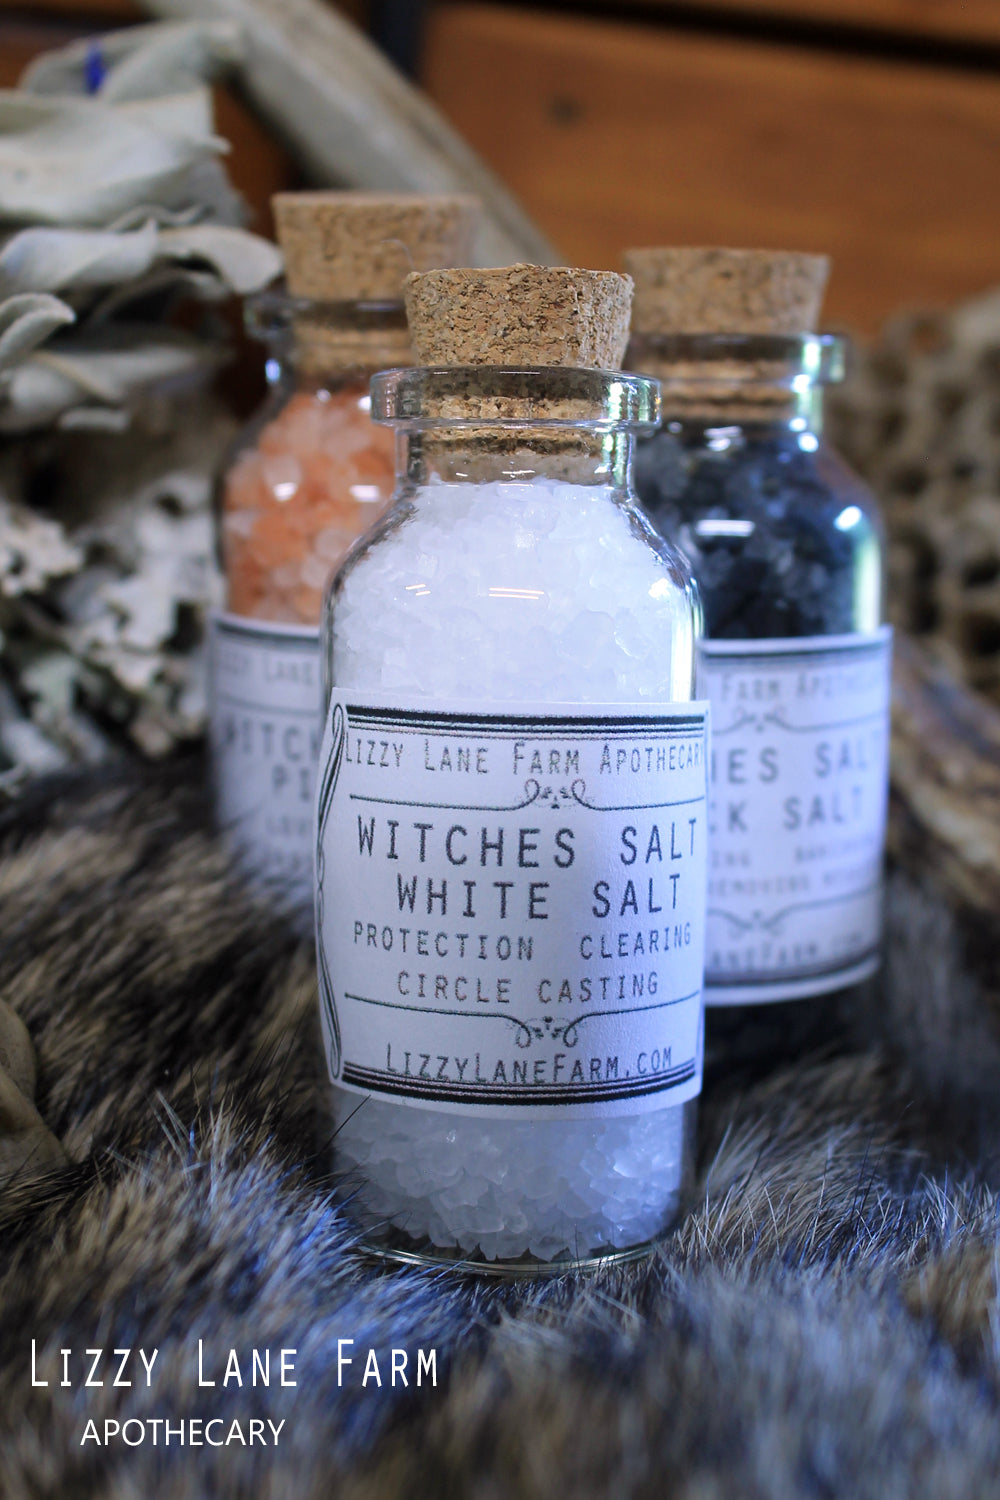 witches black salt, witches white salt, witches pink salt. Gift Box set.